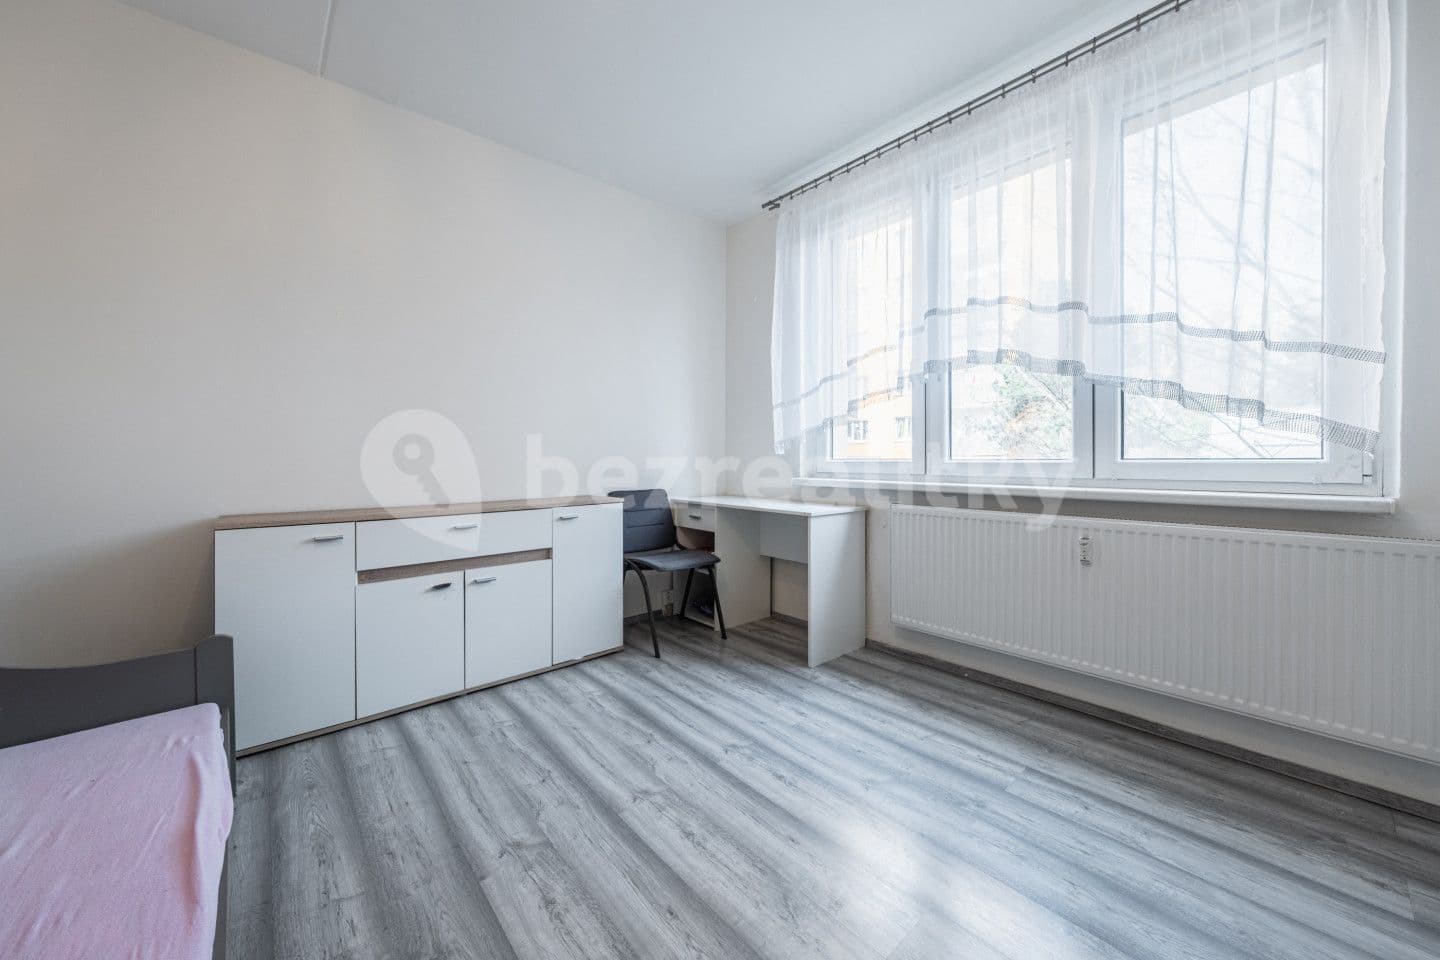 4 bedroom flat for sale, 79 m², Kamenná, Chomutov, Ústecký Region